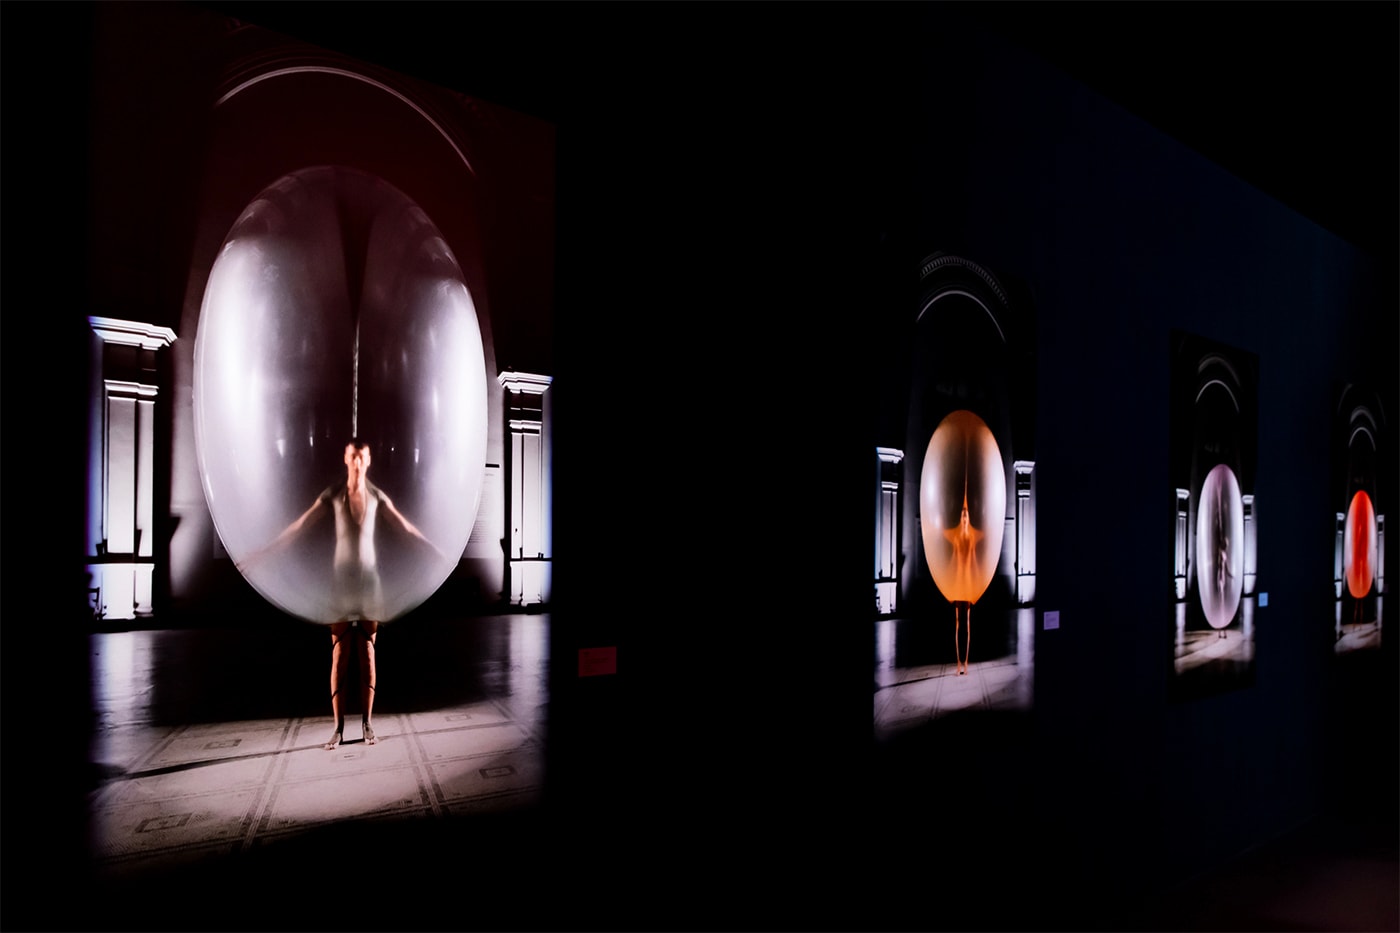 ArtisTree Fredrik Tjærandsen Light In/Out Film Exhibition Inside Look Hong Kong